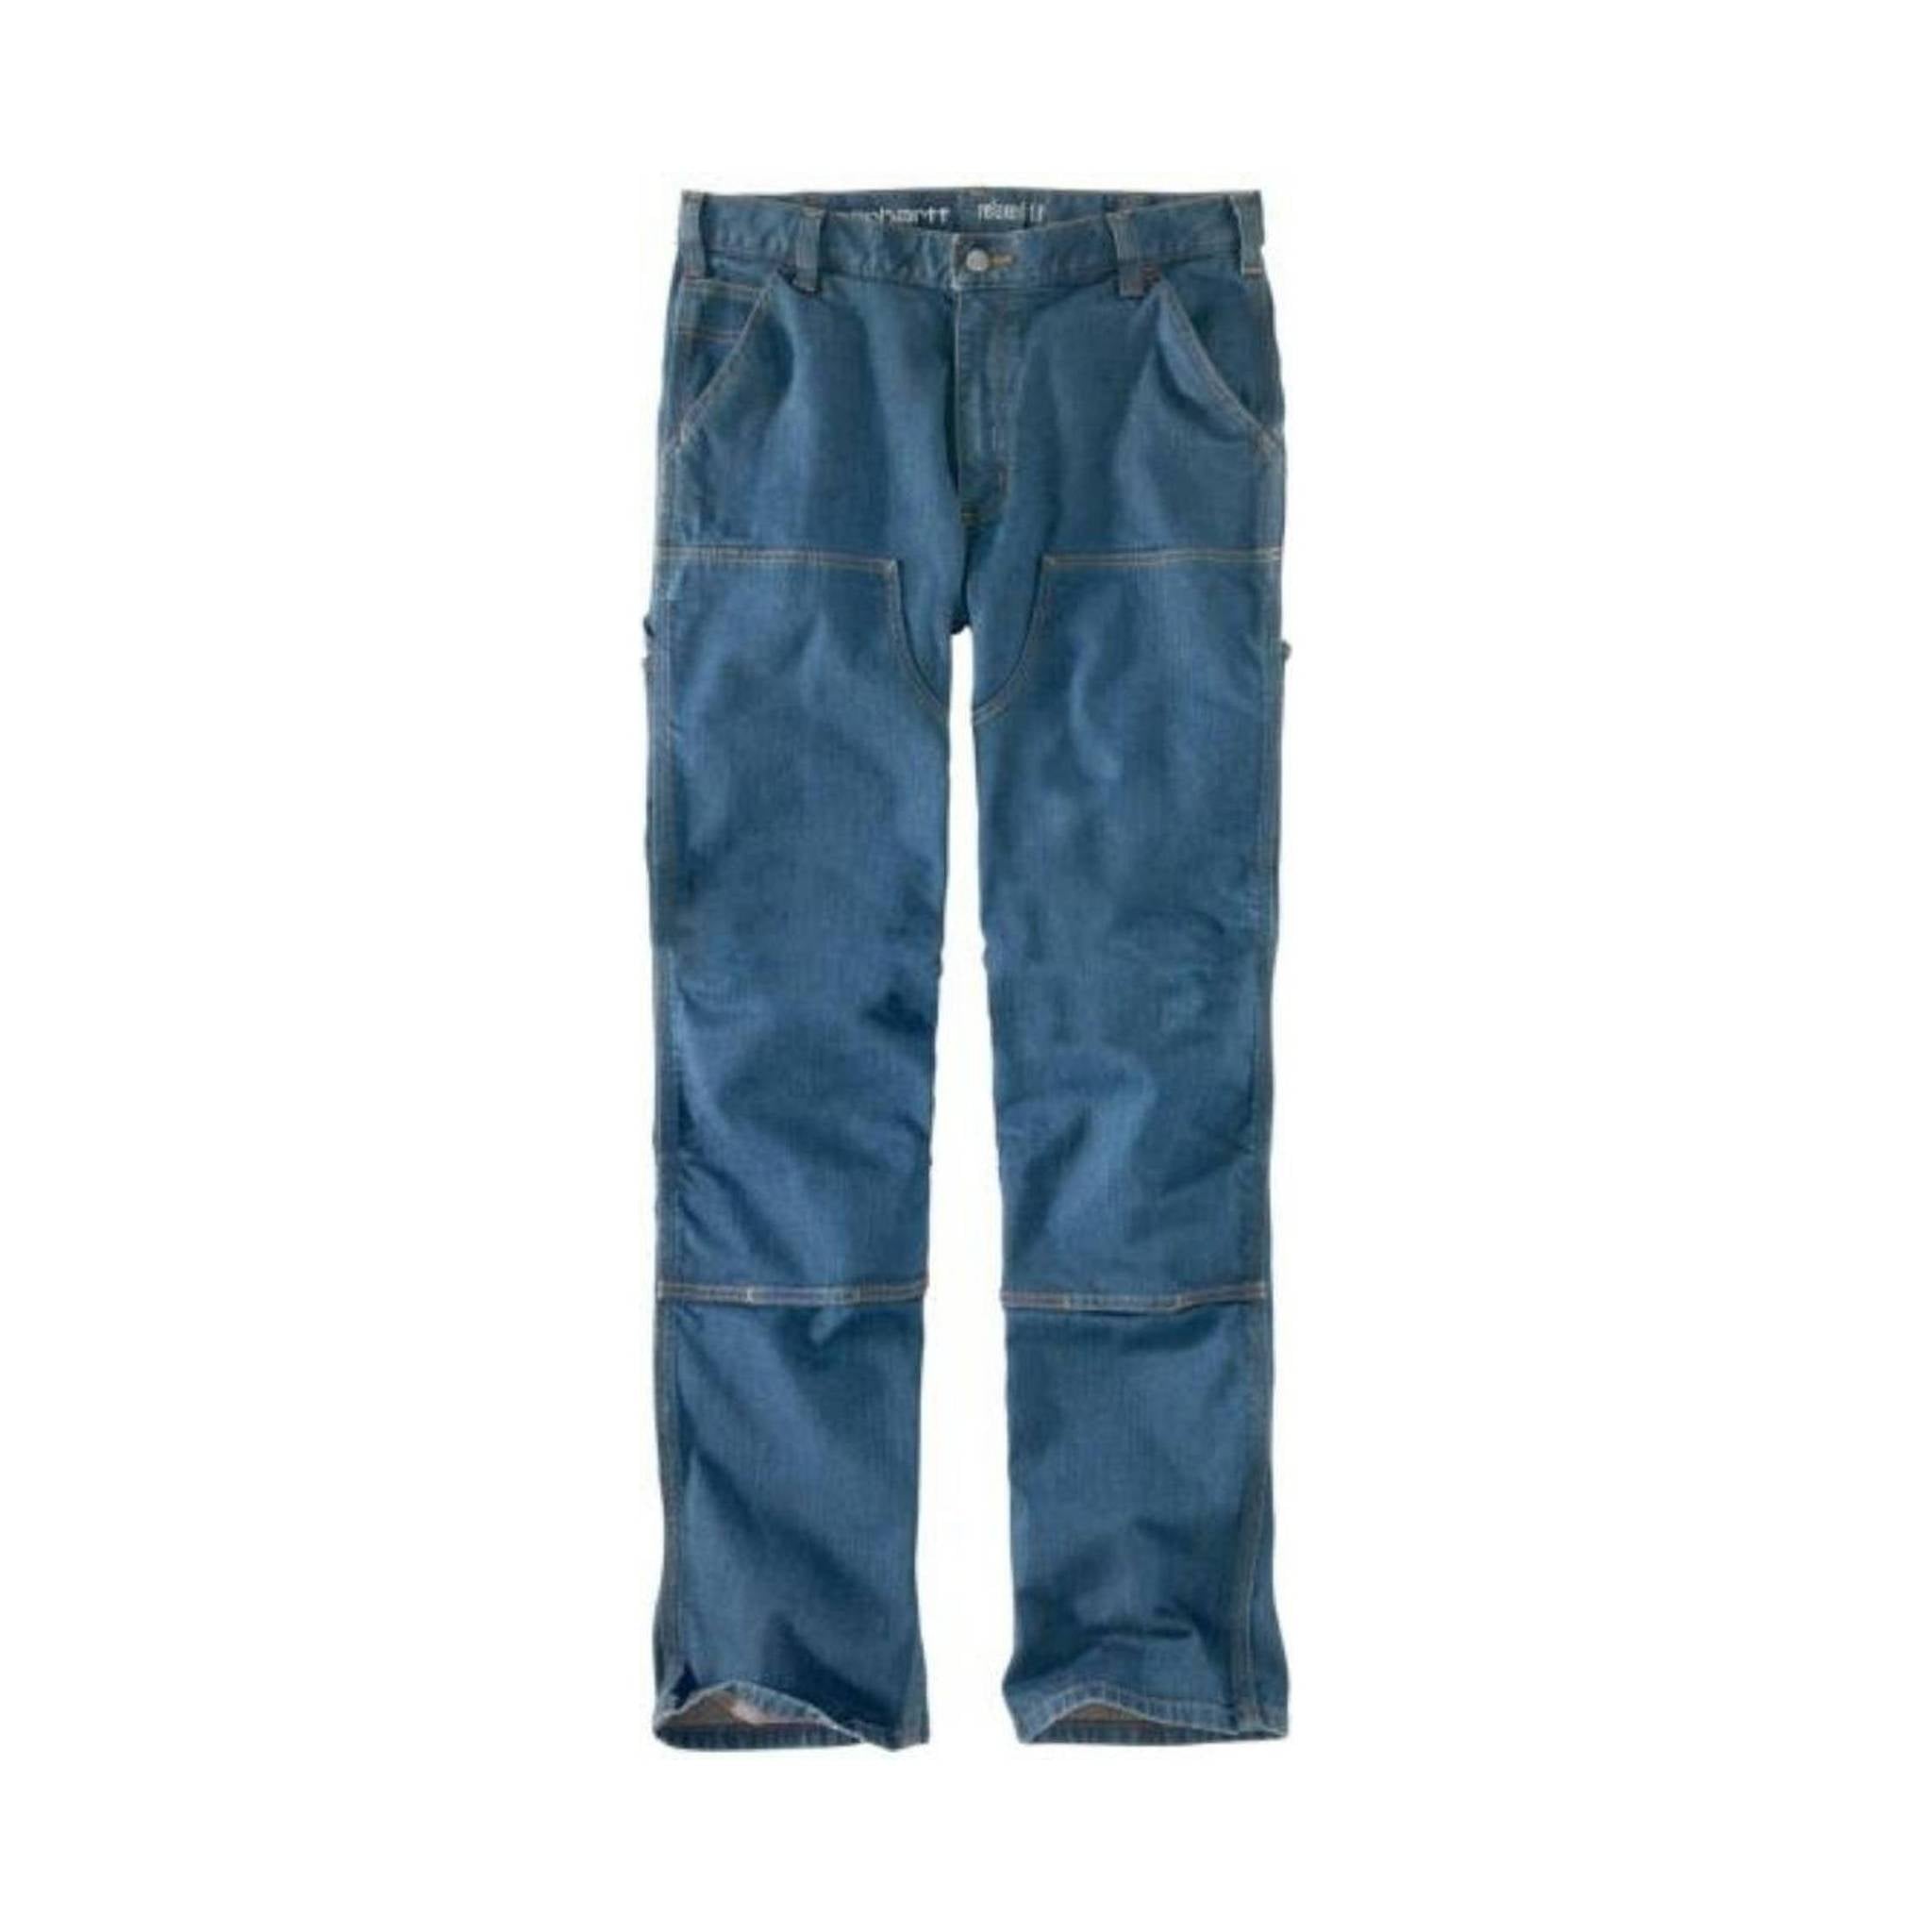 Carhartt slim fit double knee pants, Men's Fashion, Bottoms, Jeans